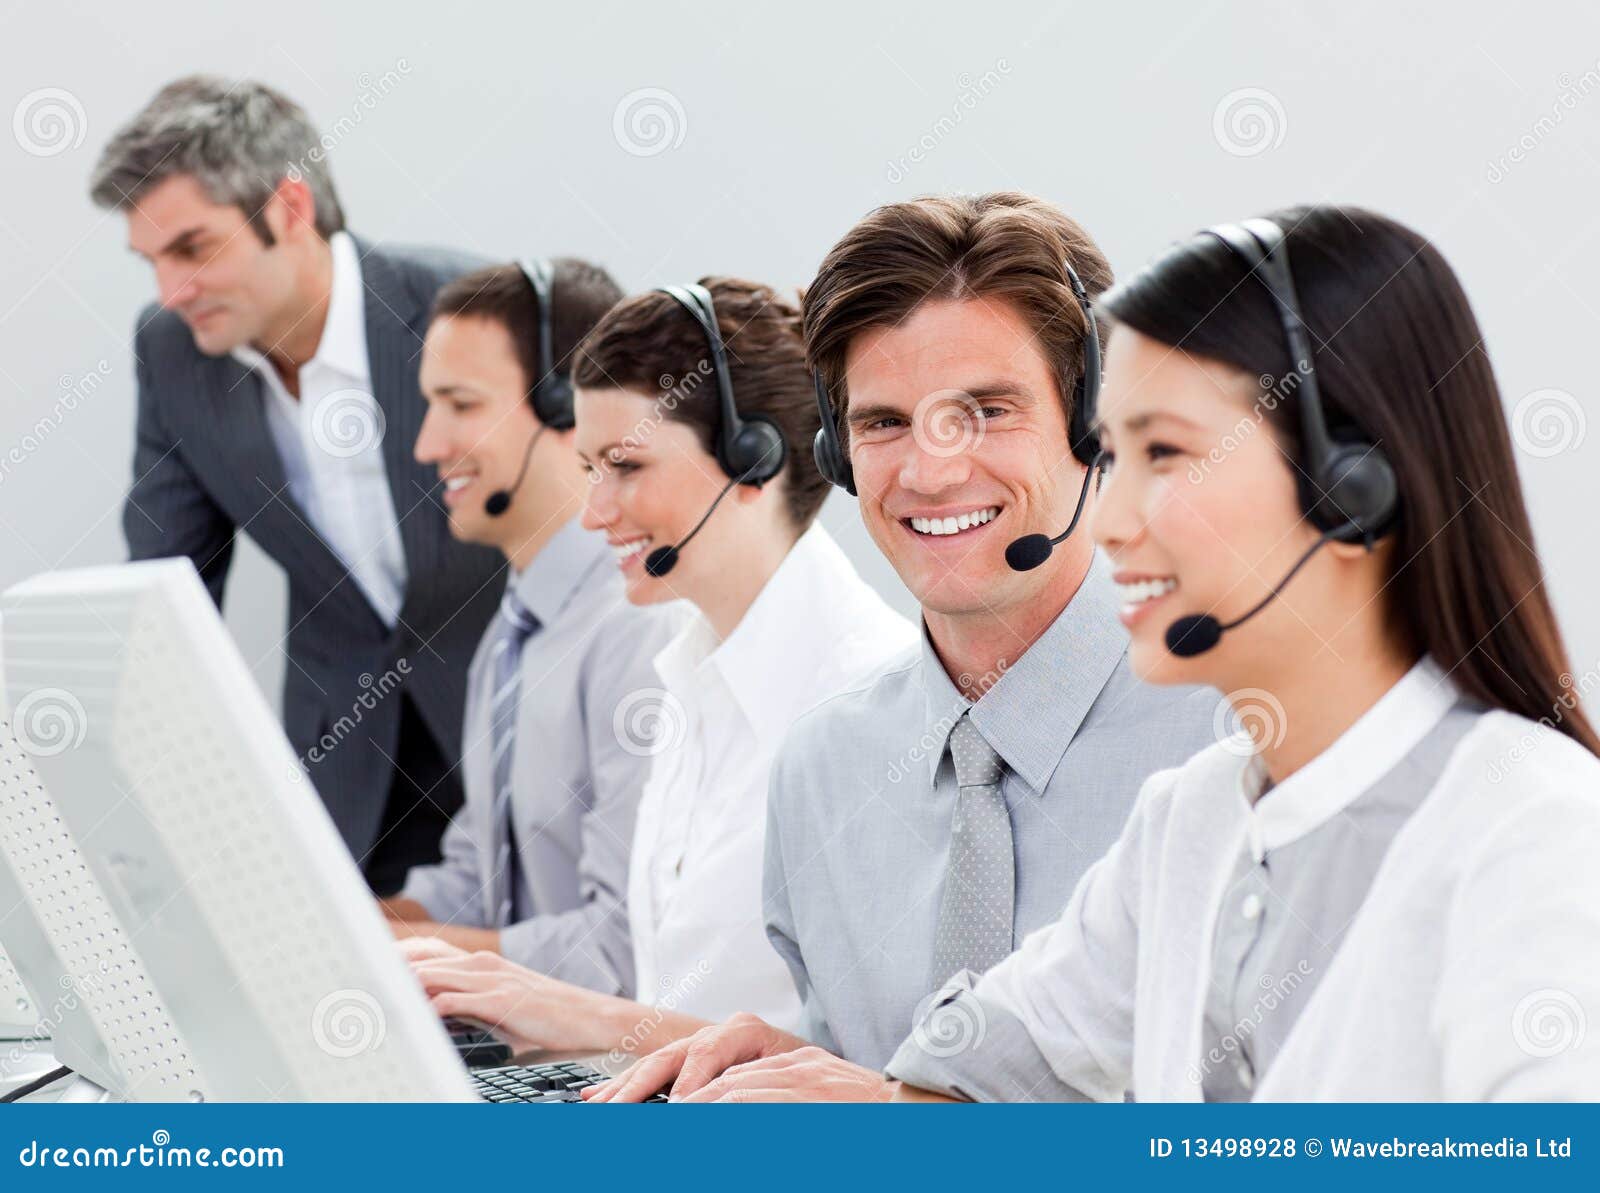 self-assured customer service representatives